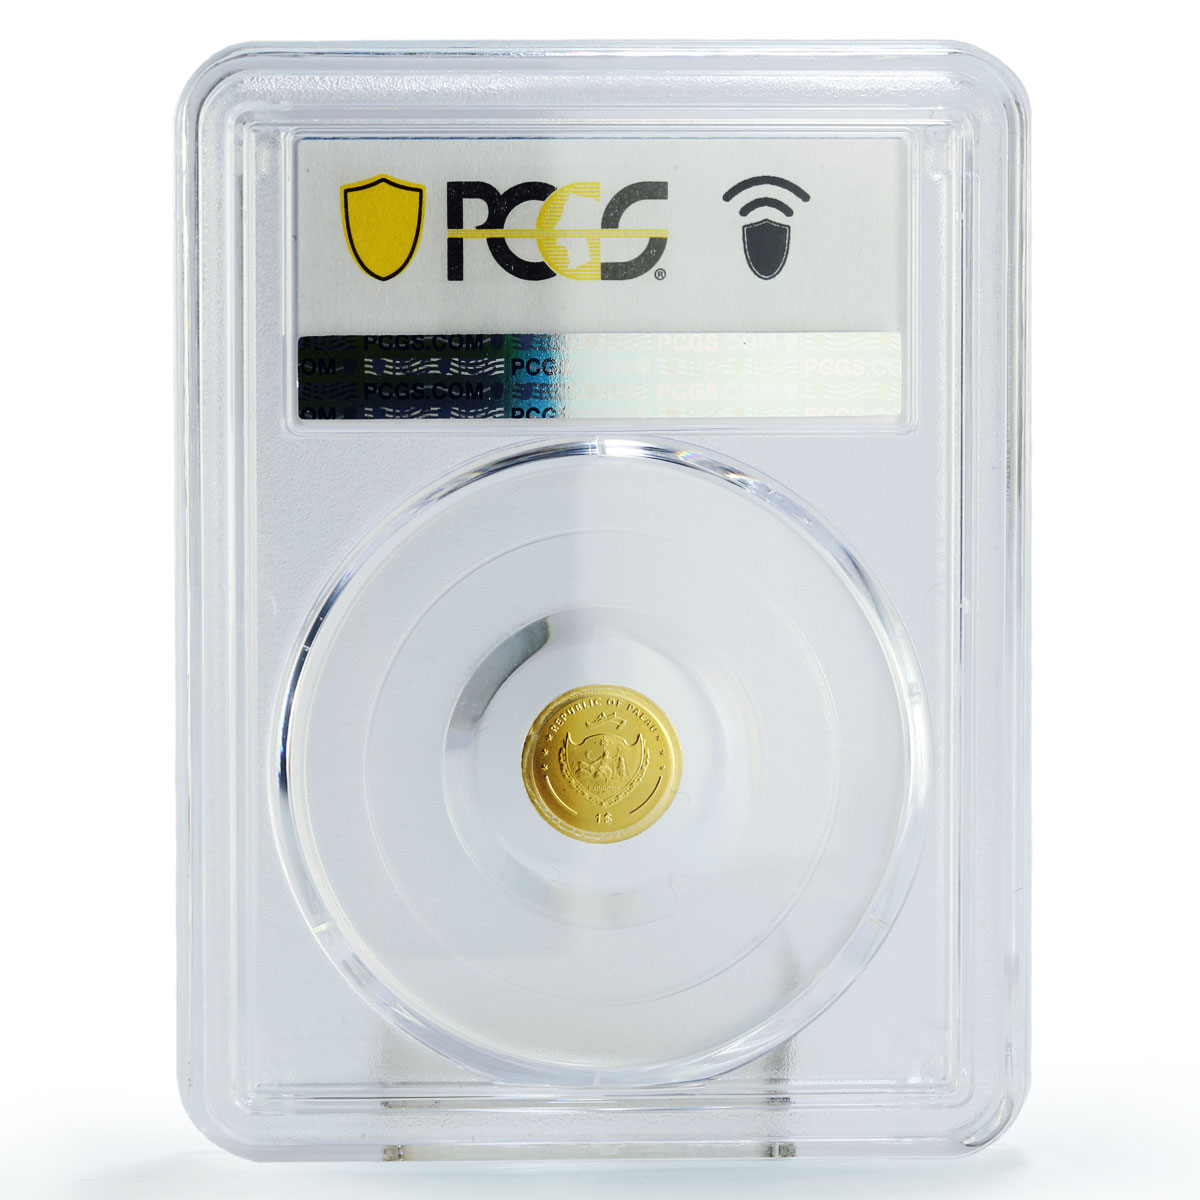 Palau 1 dollar Rome Empire Emperor Constantine Politics MS70 PCGS gold coin 2012